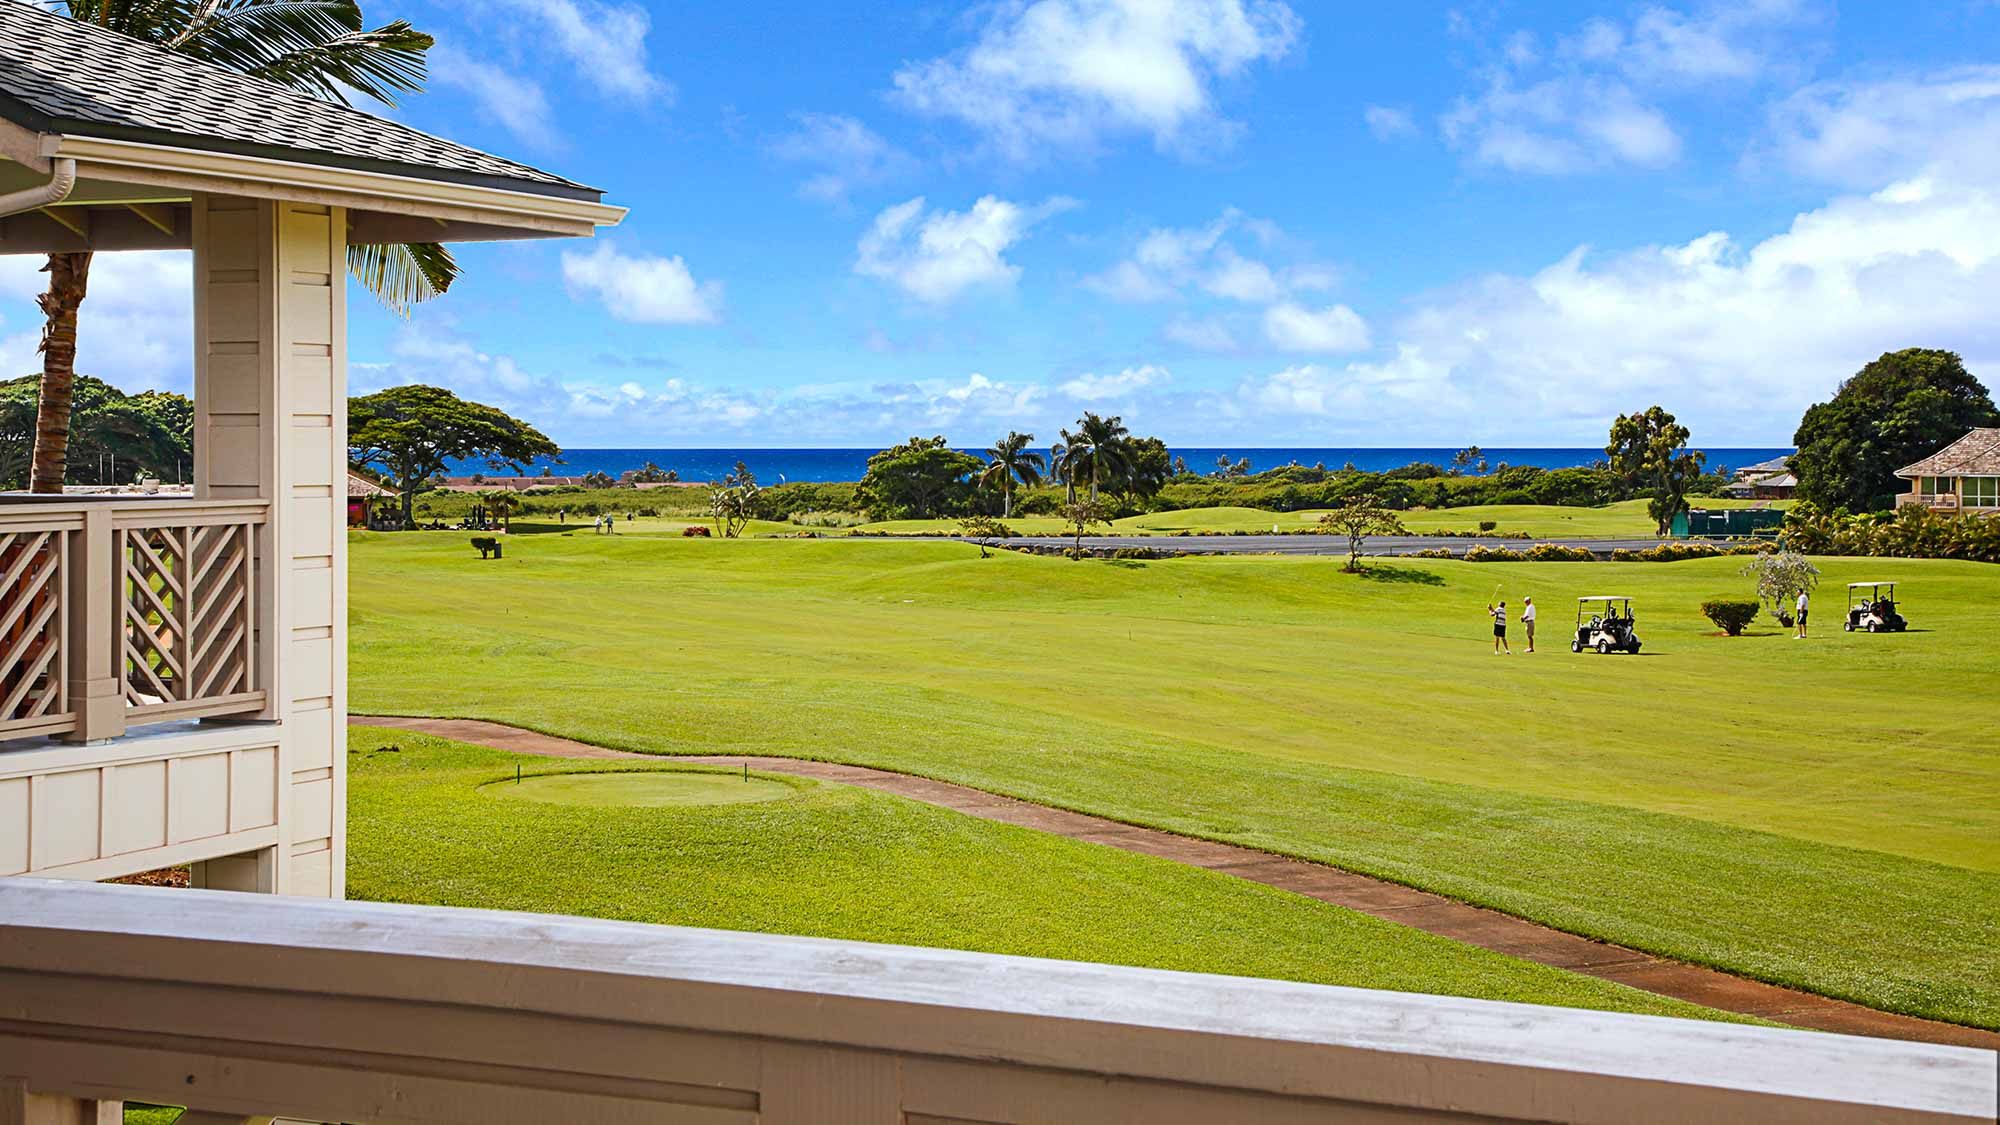 Pili Mai Resort at Poipu #08K - Golf Course Ocean View - Parrish Kauai